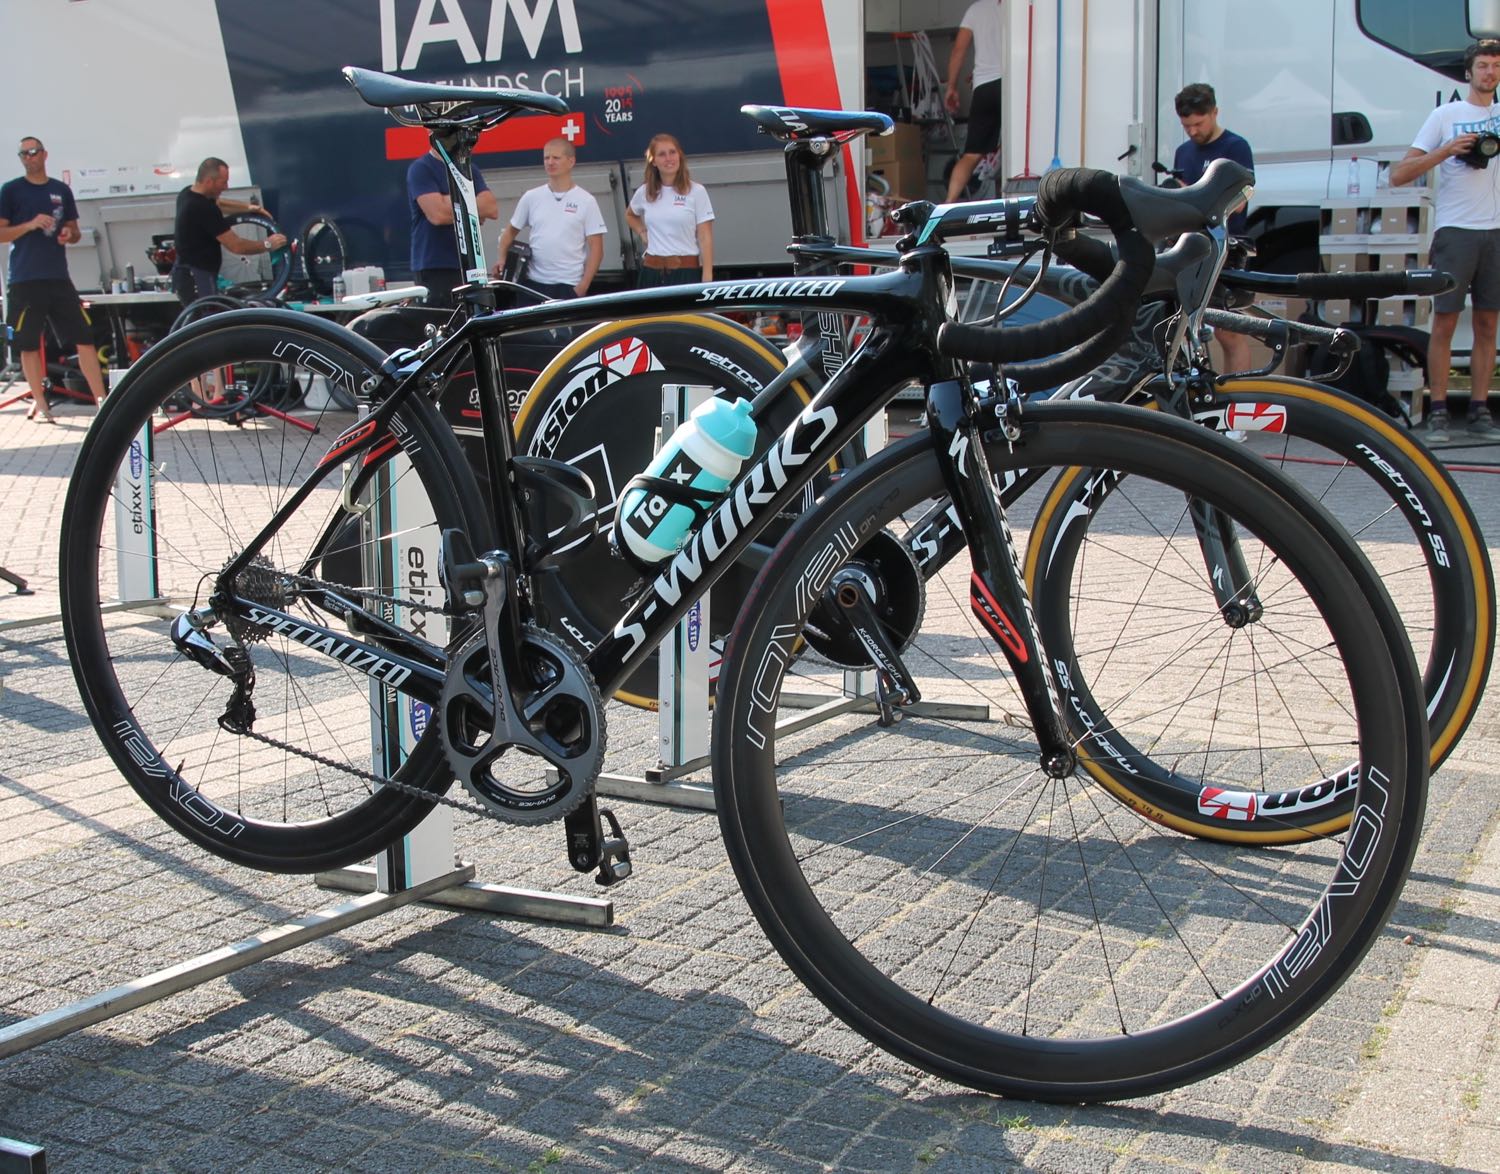 Tour de France Bikes 2015: Special bikes, suspension and wider tyres